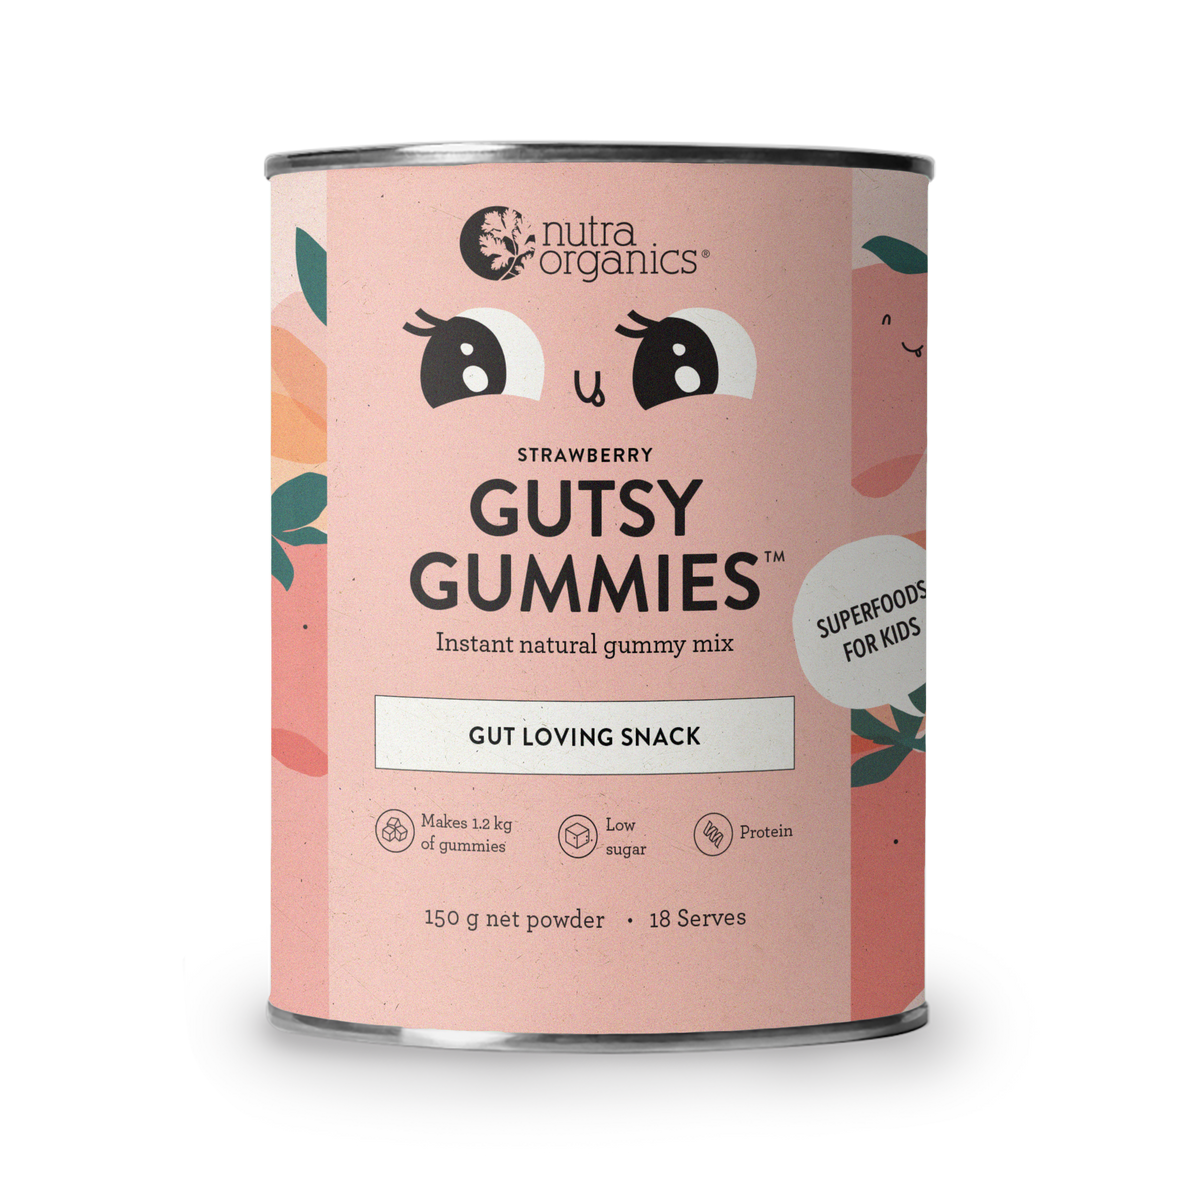 Nutra Organics Gutsy Gummies 150g - 3 flavors